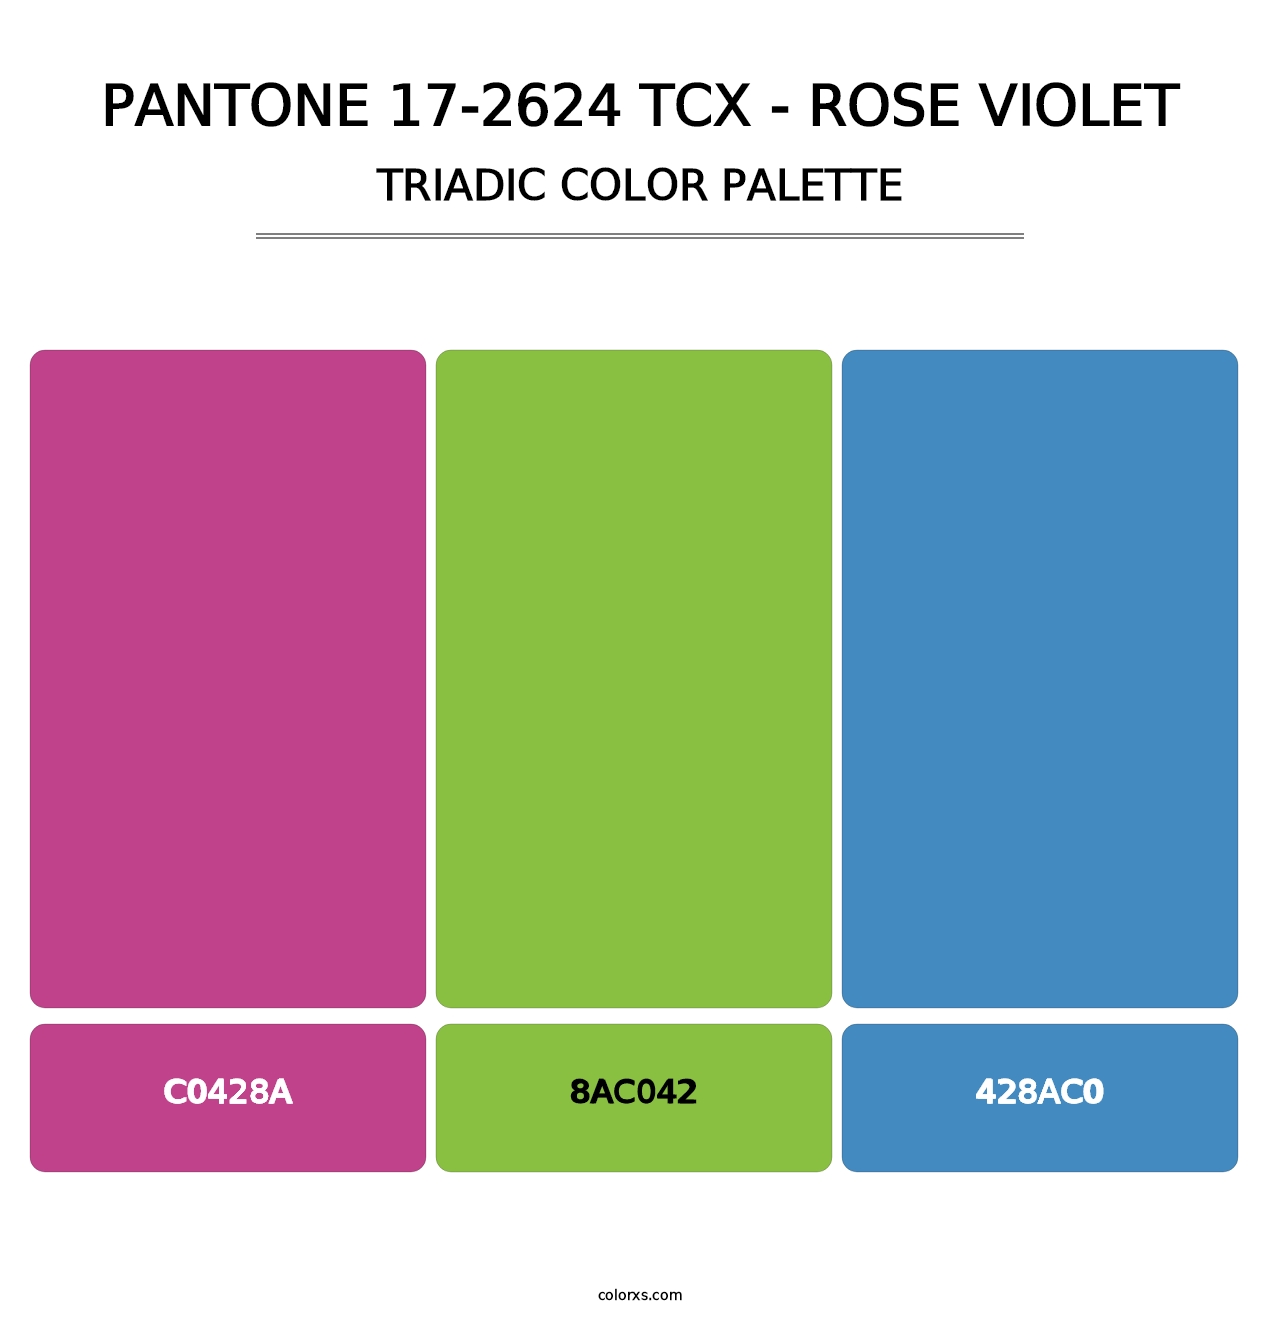 PANTONE 17-2624 TCX - Rose Violet - Triadic Color Palette